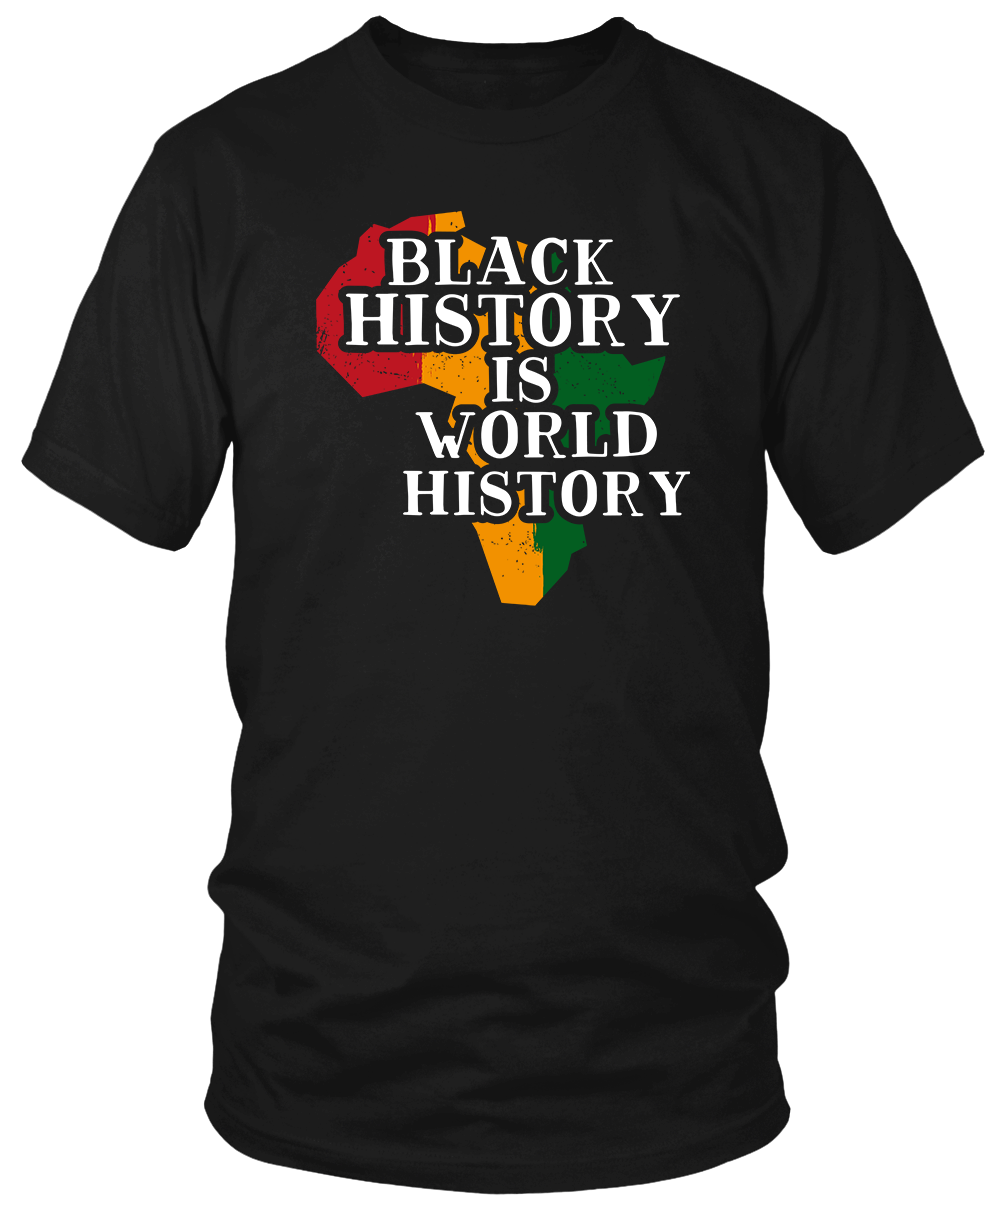 BLACK HISTORY IS WORLD HISTORY T-SHIRT